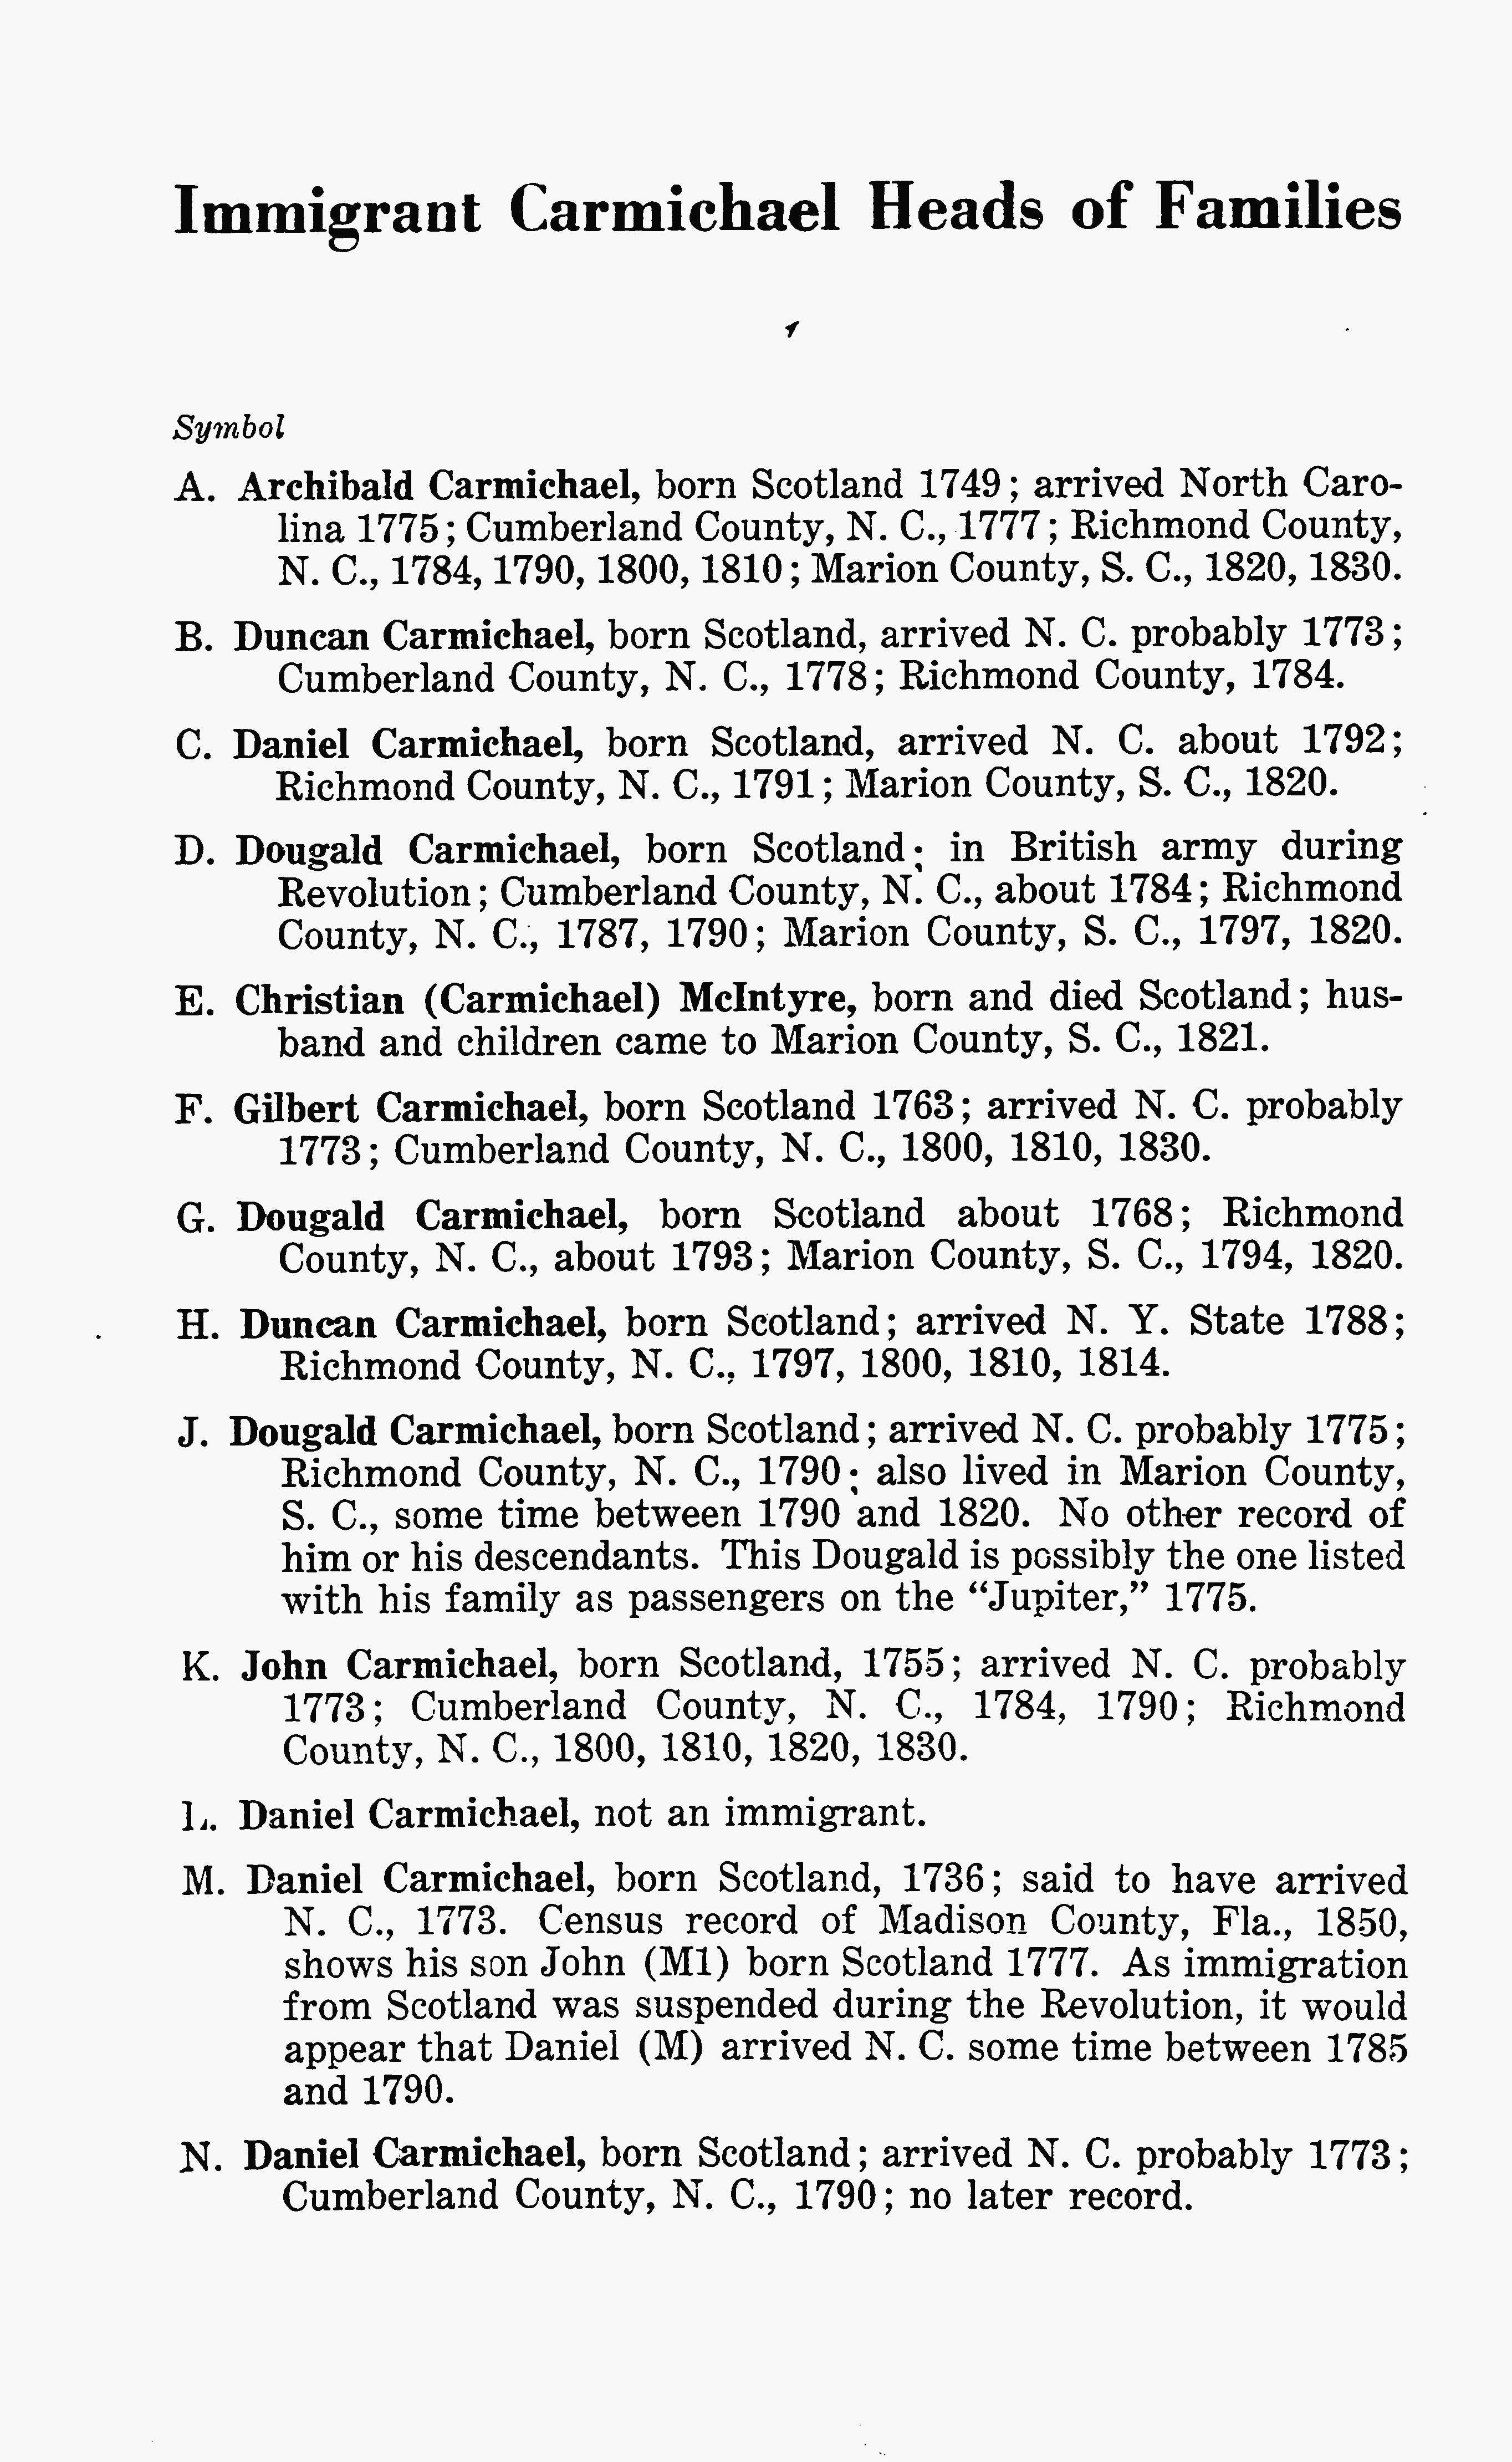 Scottish Highlanders of the Carolinas - index to immigrants, Linked To: <a href='i15683.html' >John `Ban` Carmichael (K)</a> and <a href='i15674.html' >Duncan Carmichael (H) 🧬</a> and <a href='i15462.html' >Dougald Carmichael (D) 🧬</a> and <a href='i15447.html' >Gilbert Carmichael (F) 🧬</a>